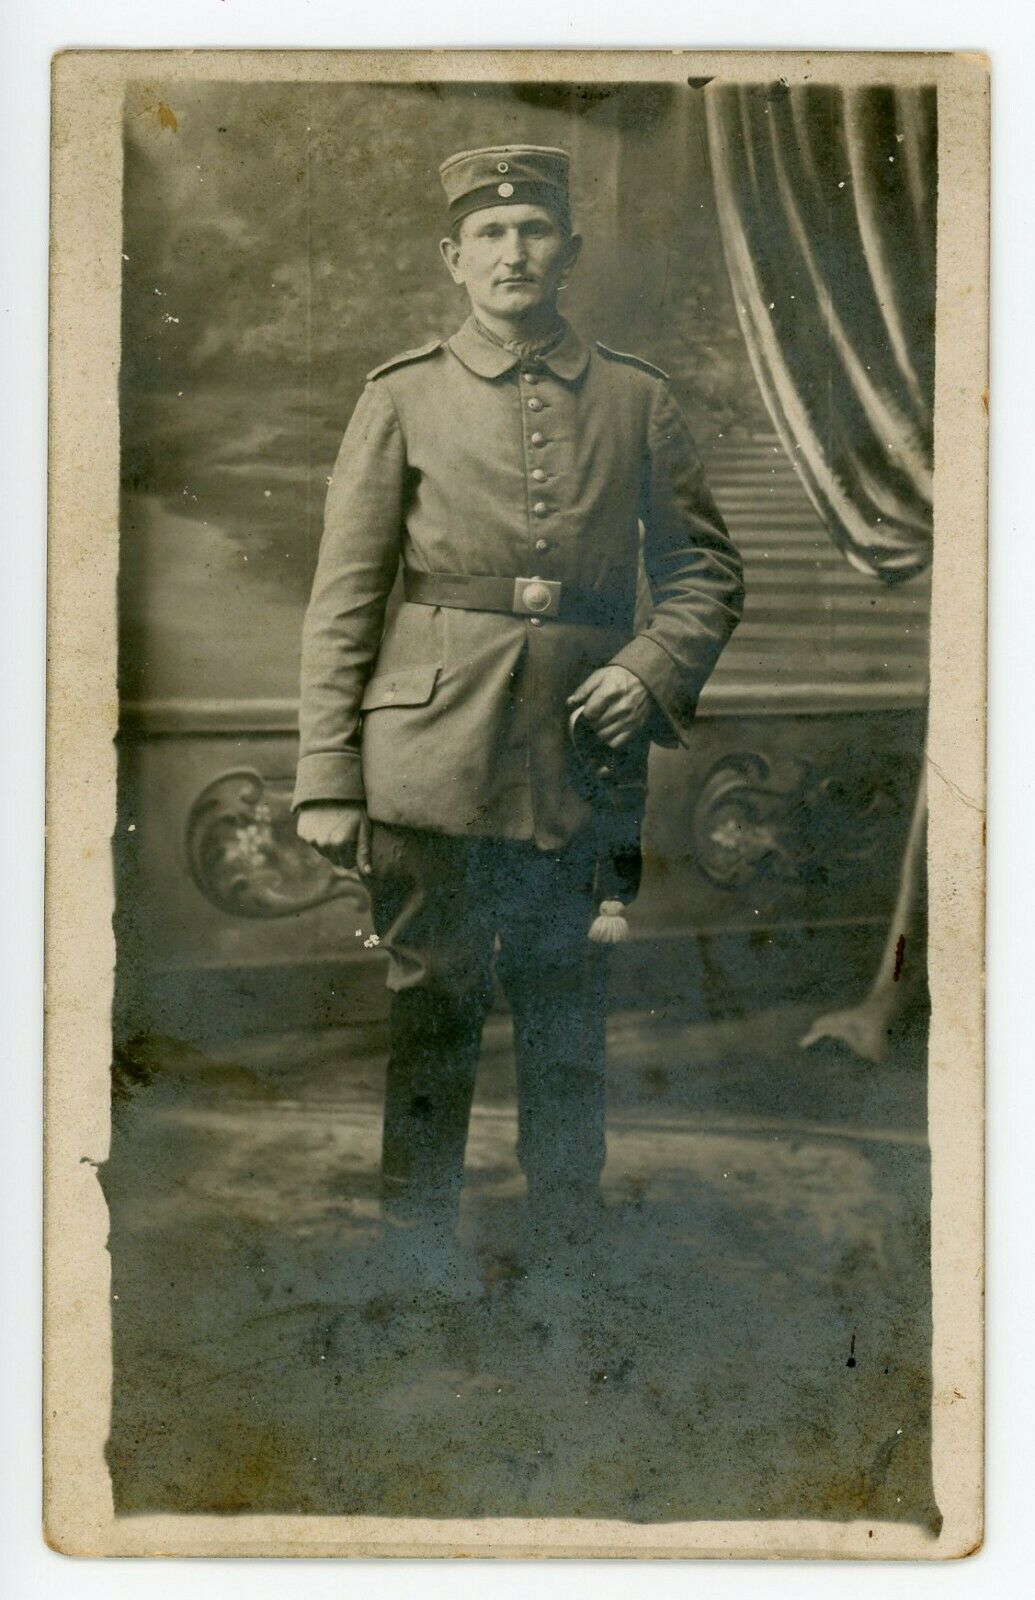 German Ww1 Portrait Photo Soldier In Pill Box Hat Greetings From Flandern